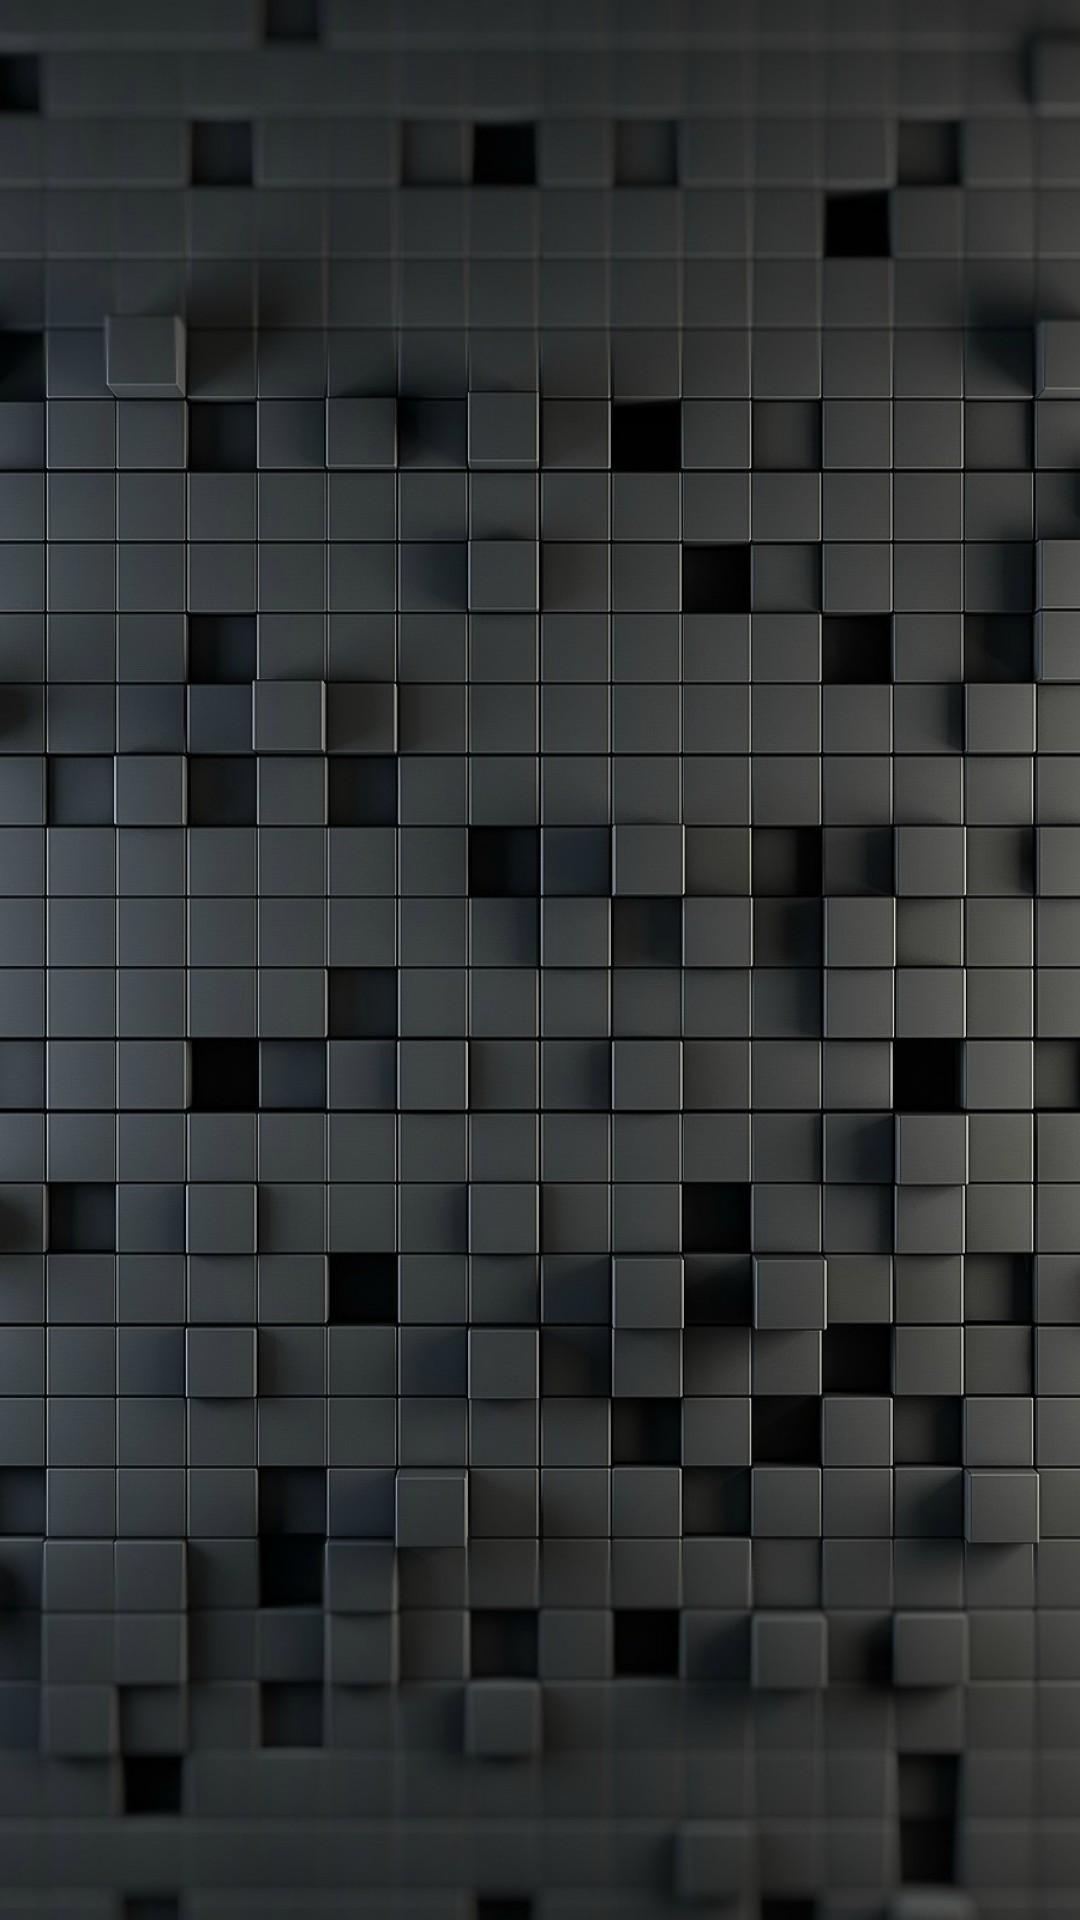 3d Black Cube Wallpaper Iphone Image Num 29